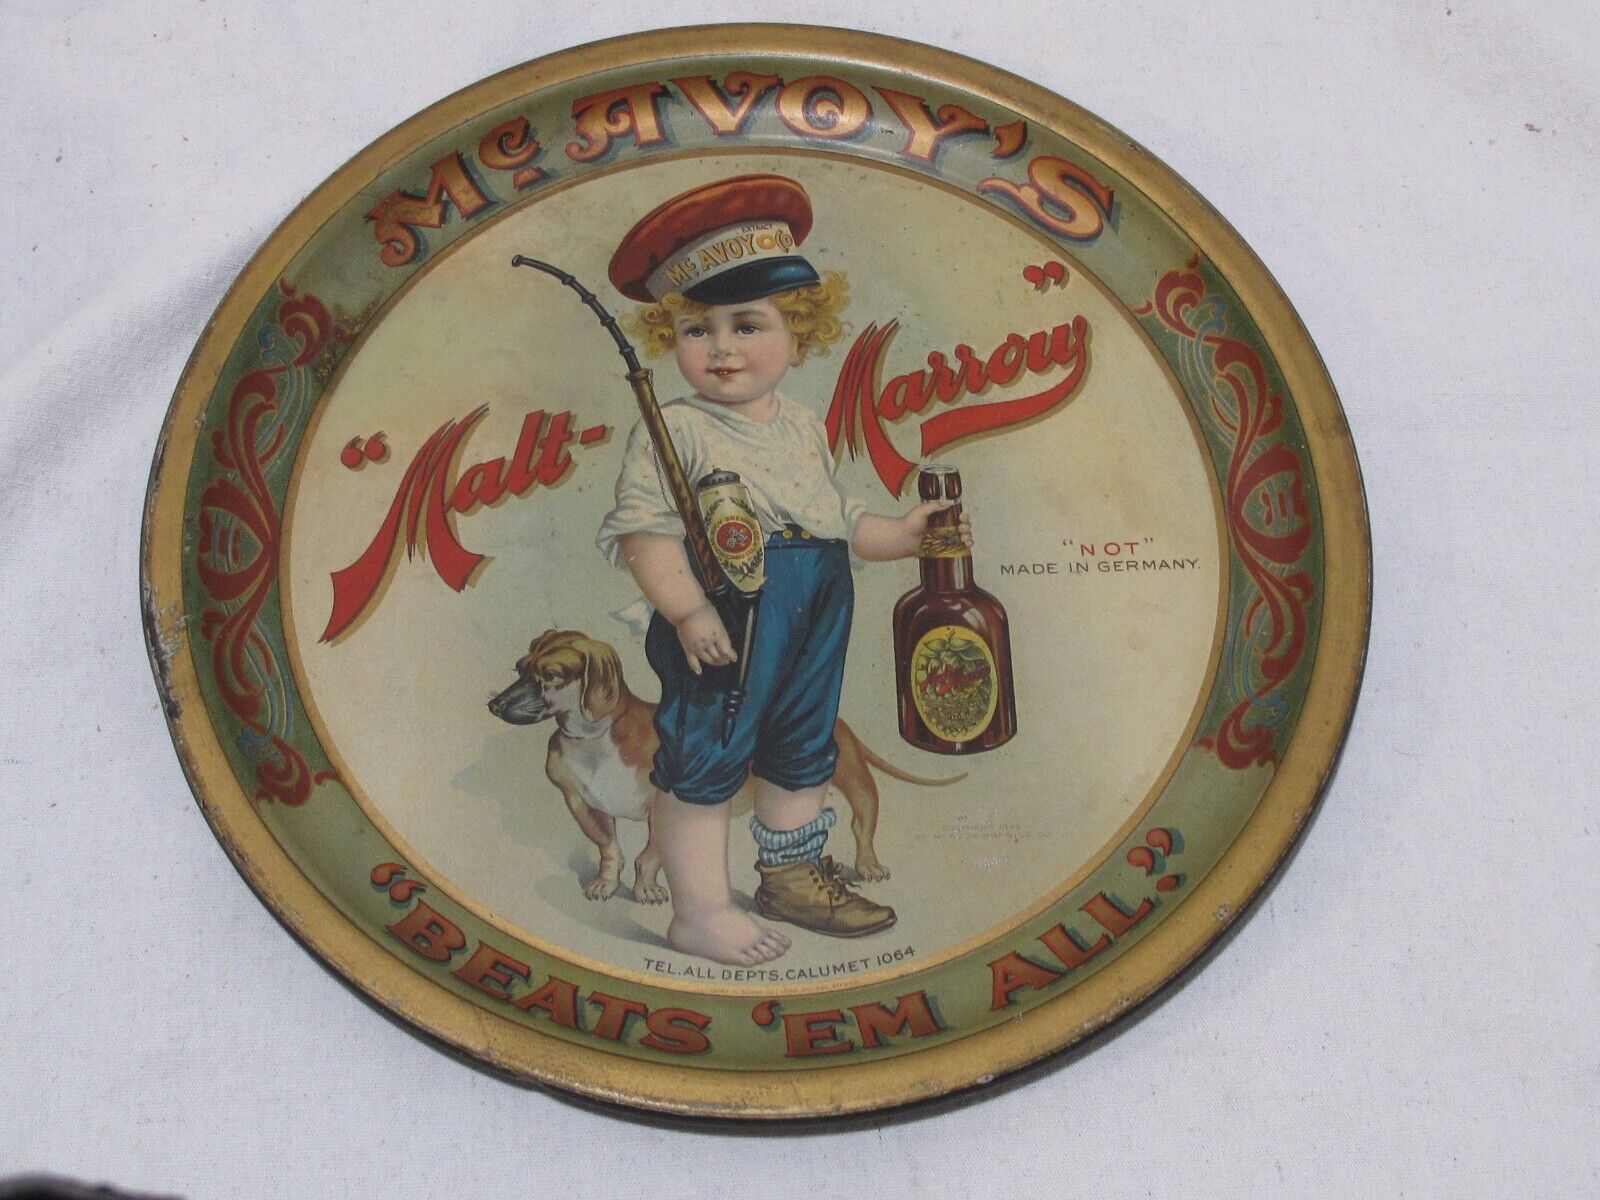 Antique McAvoys Malt Marrow Brewery Tray Boy and Dog 1899